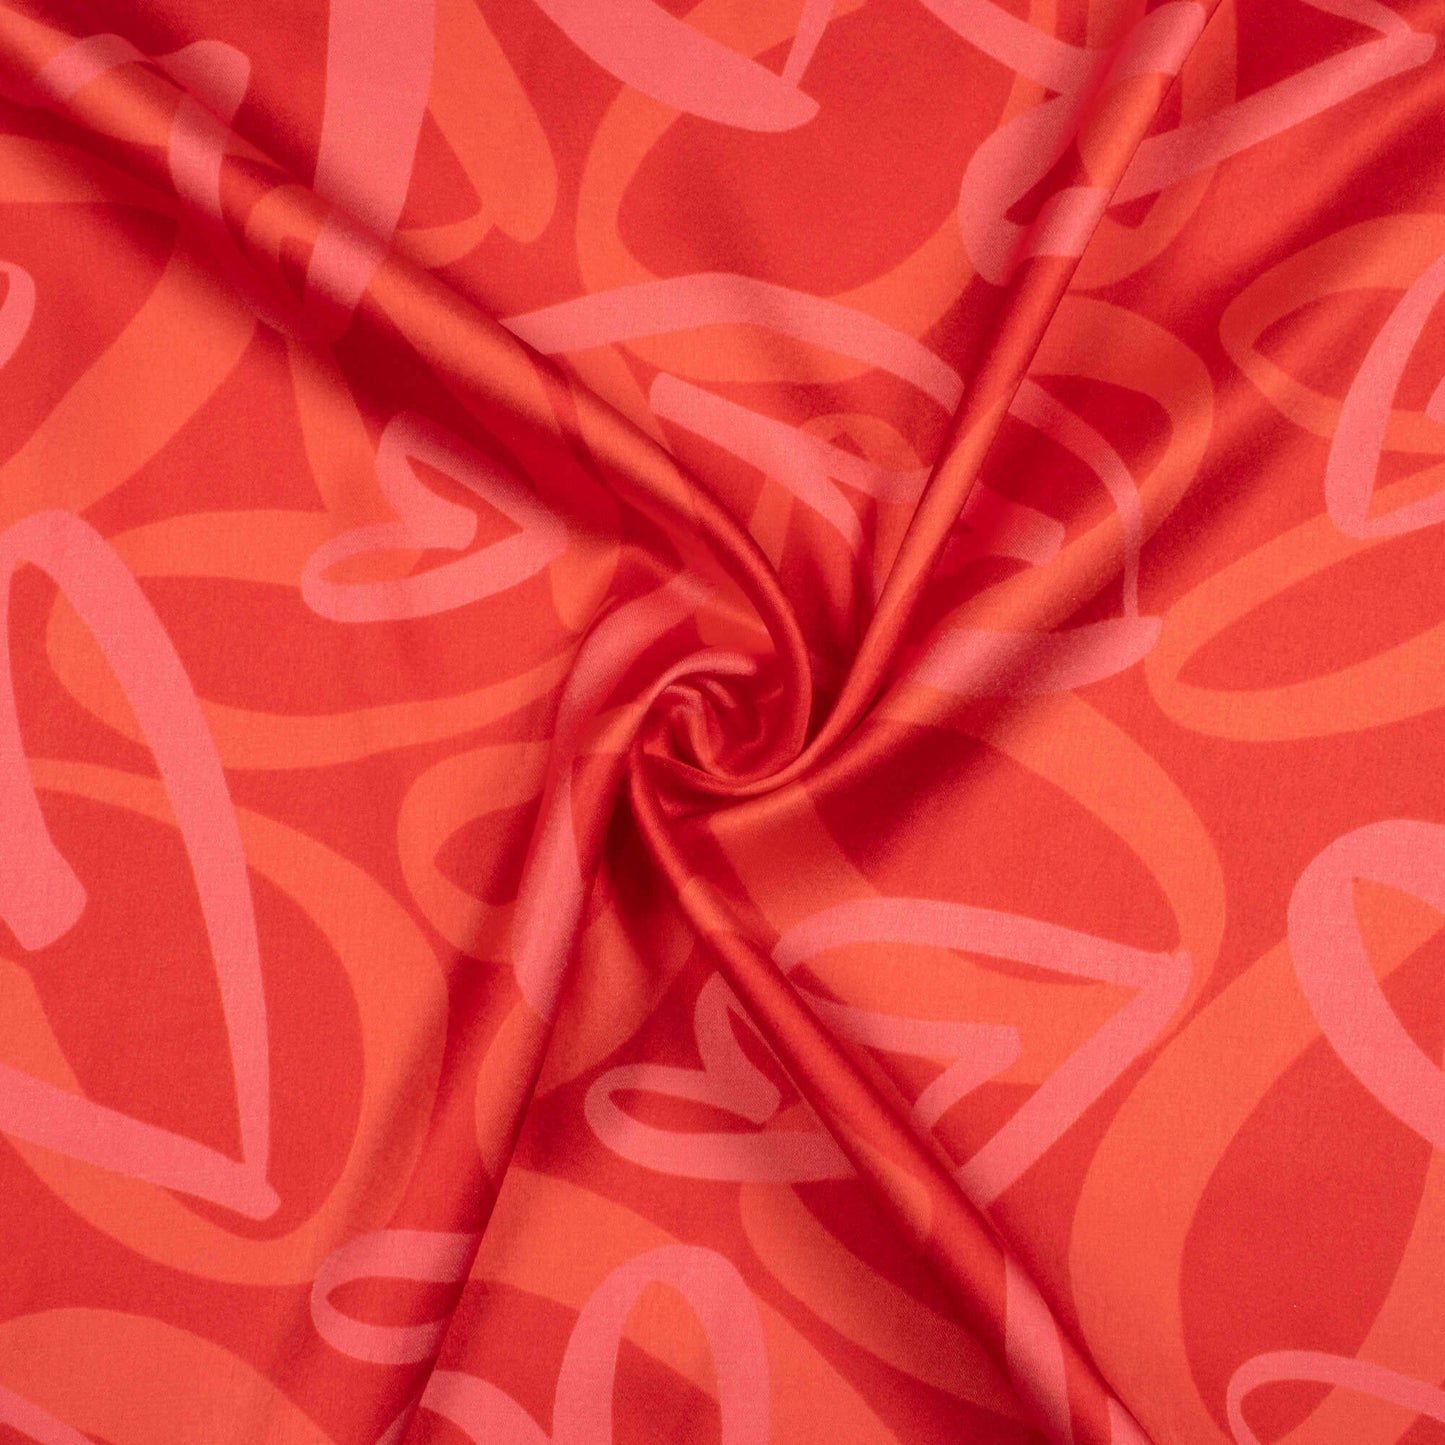 Cherry Red And Taffy Pink Heart Pattern Digital Print Japan Satin Fabric